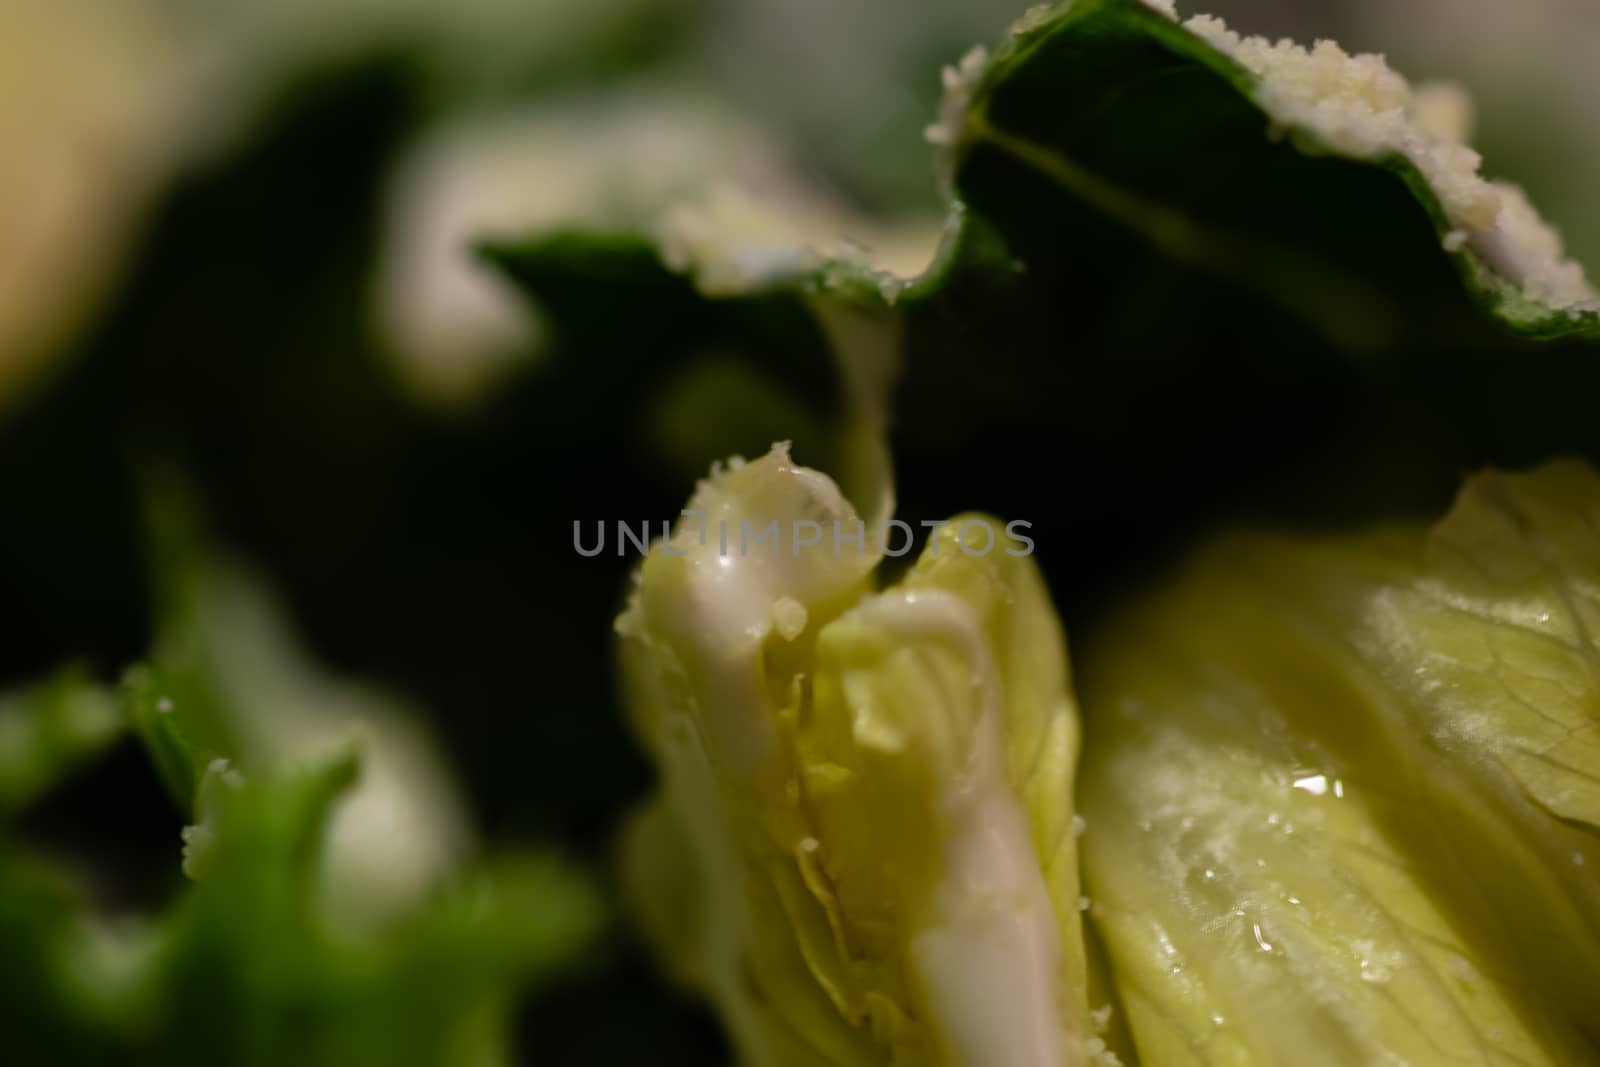 Macro close up of green salad by imagesbykenny